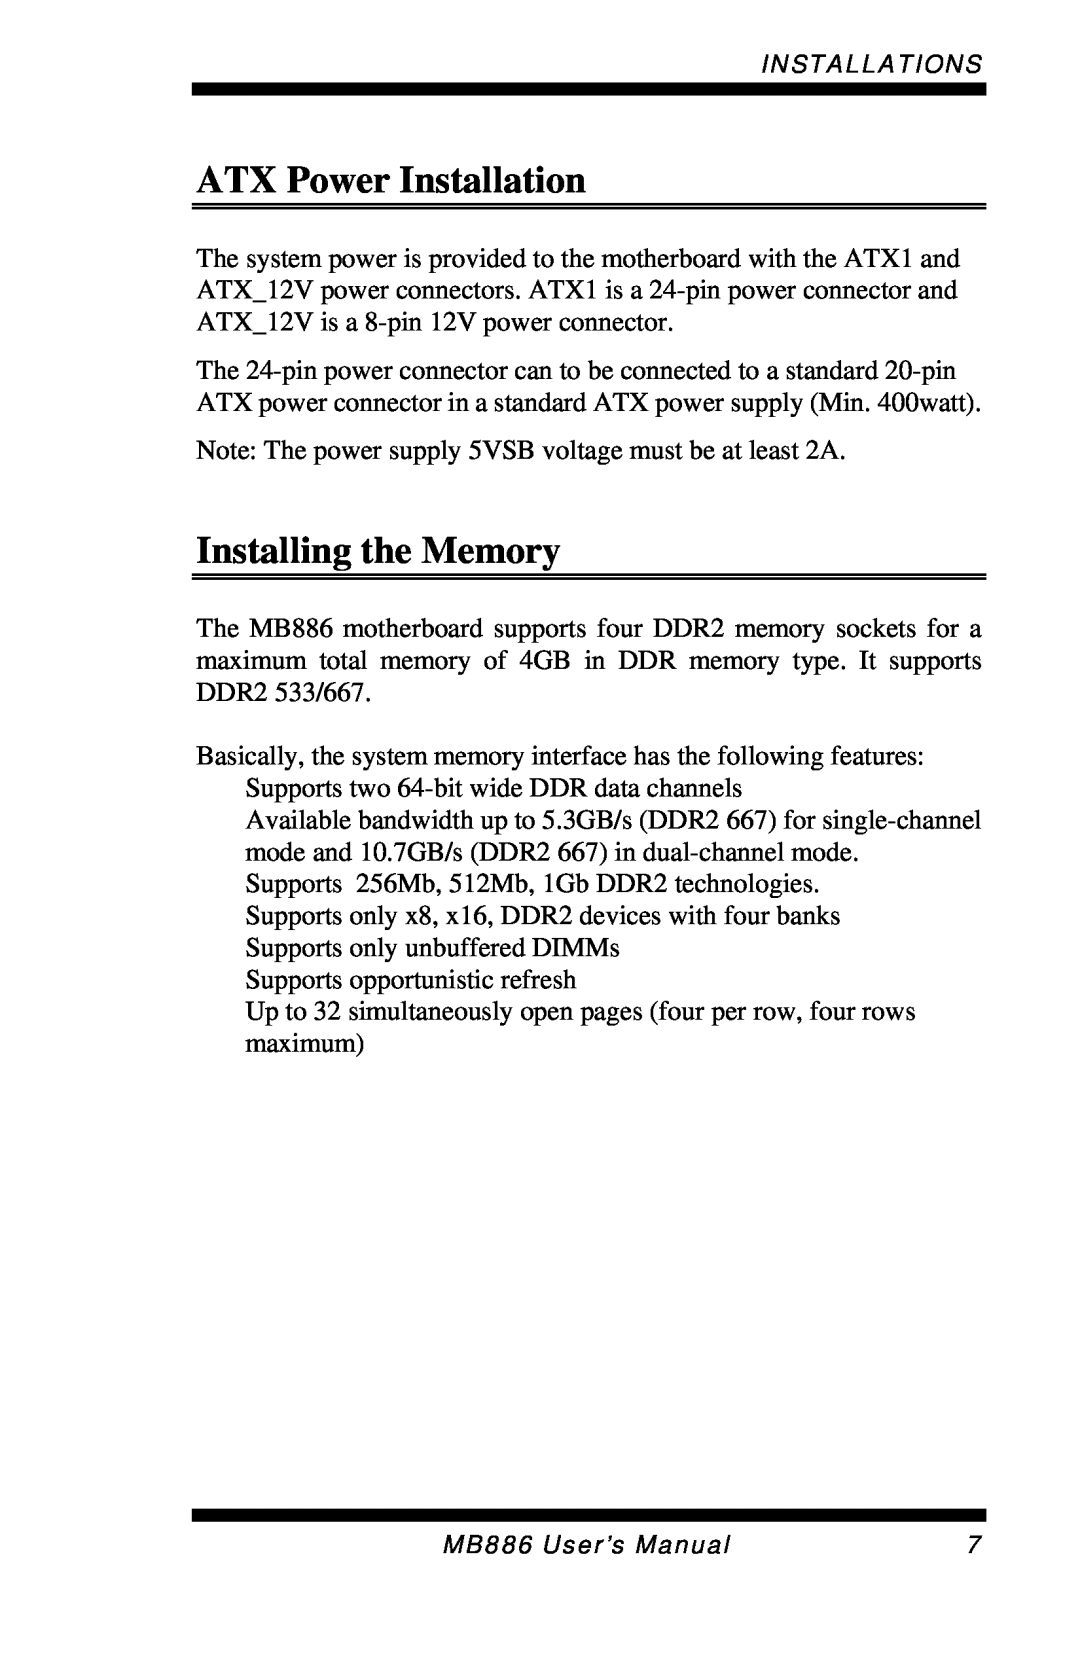 Intel MB886 user manual ATX Power Installation, Installing the Memory 